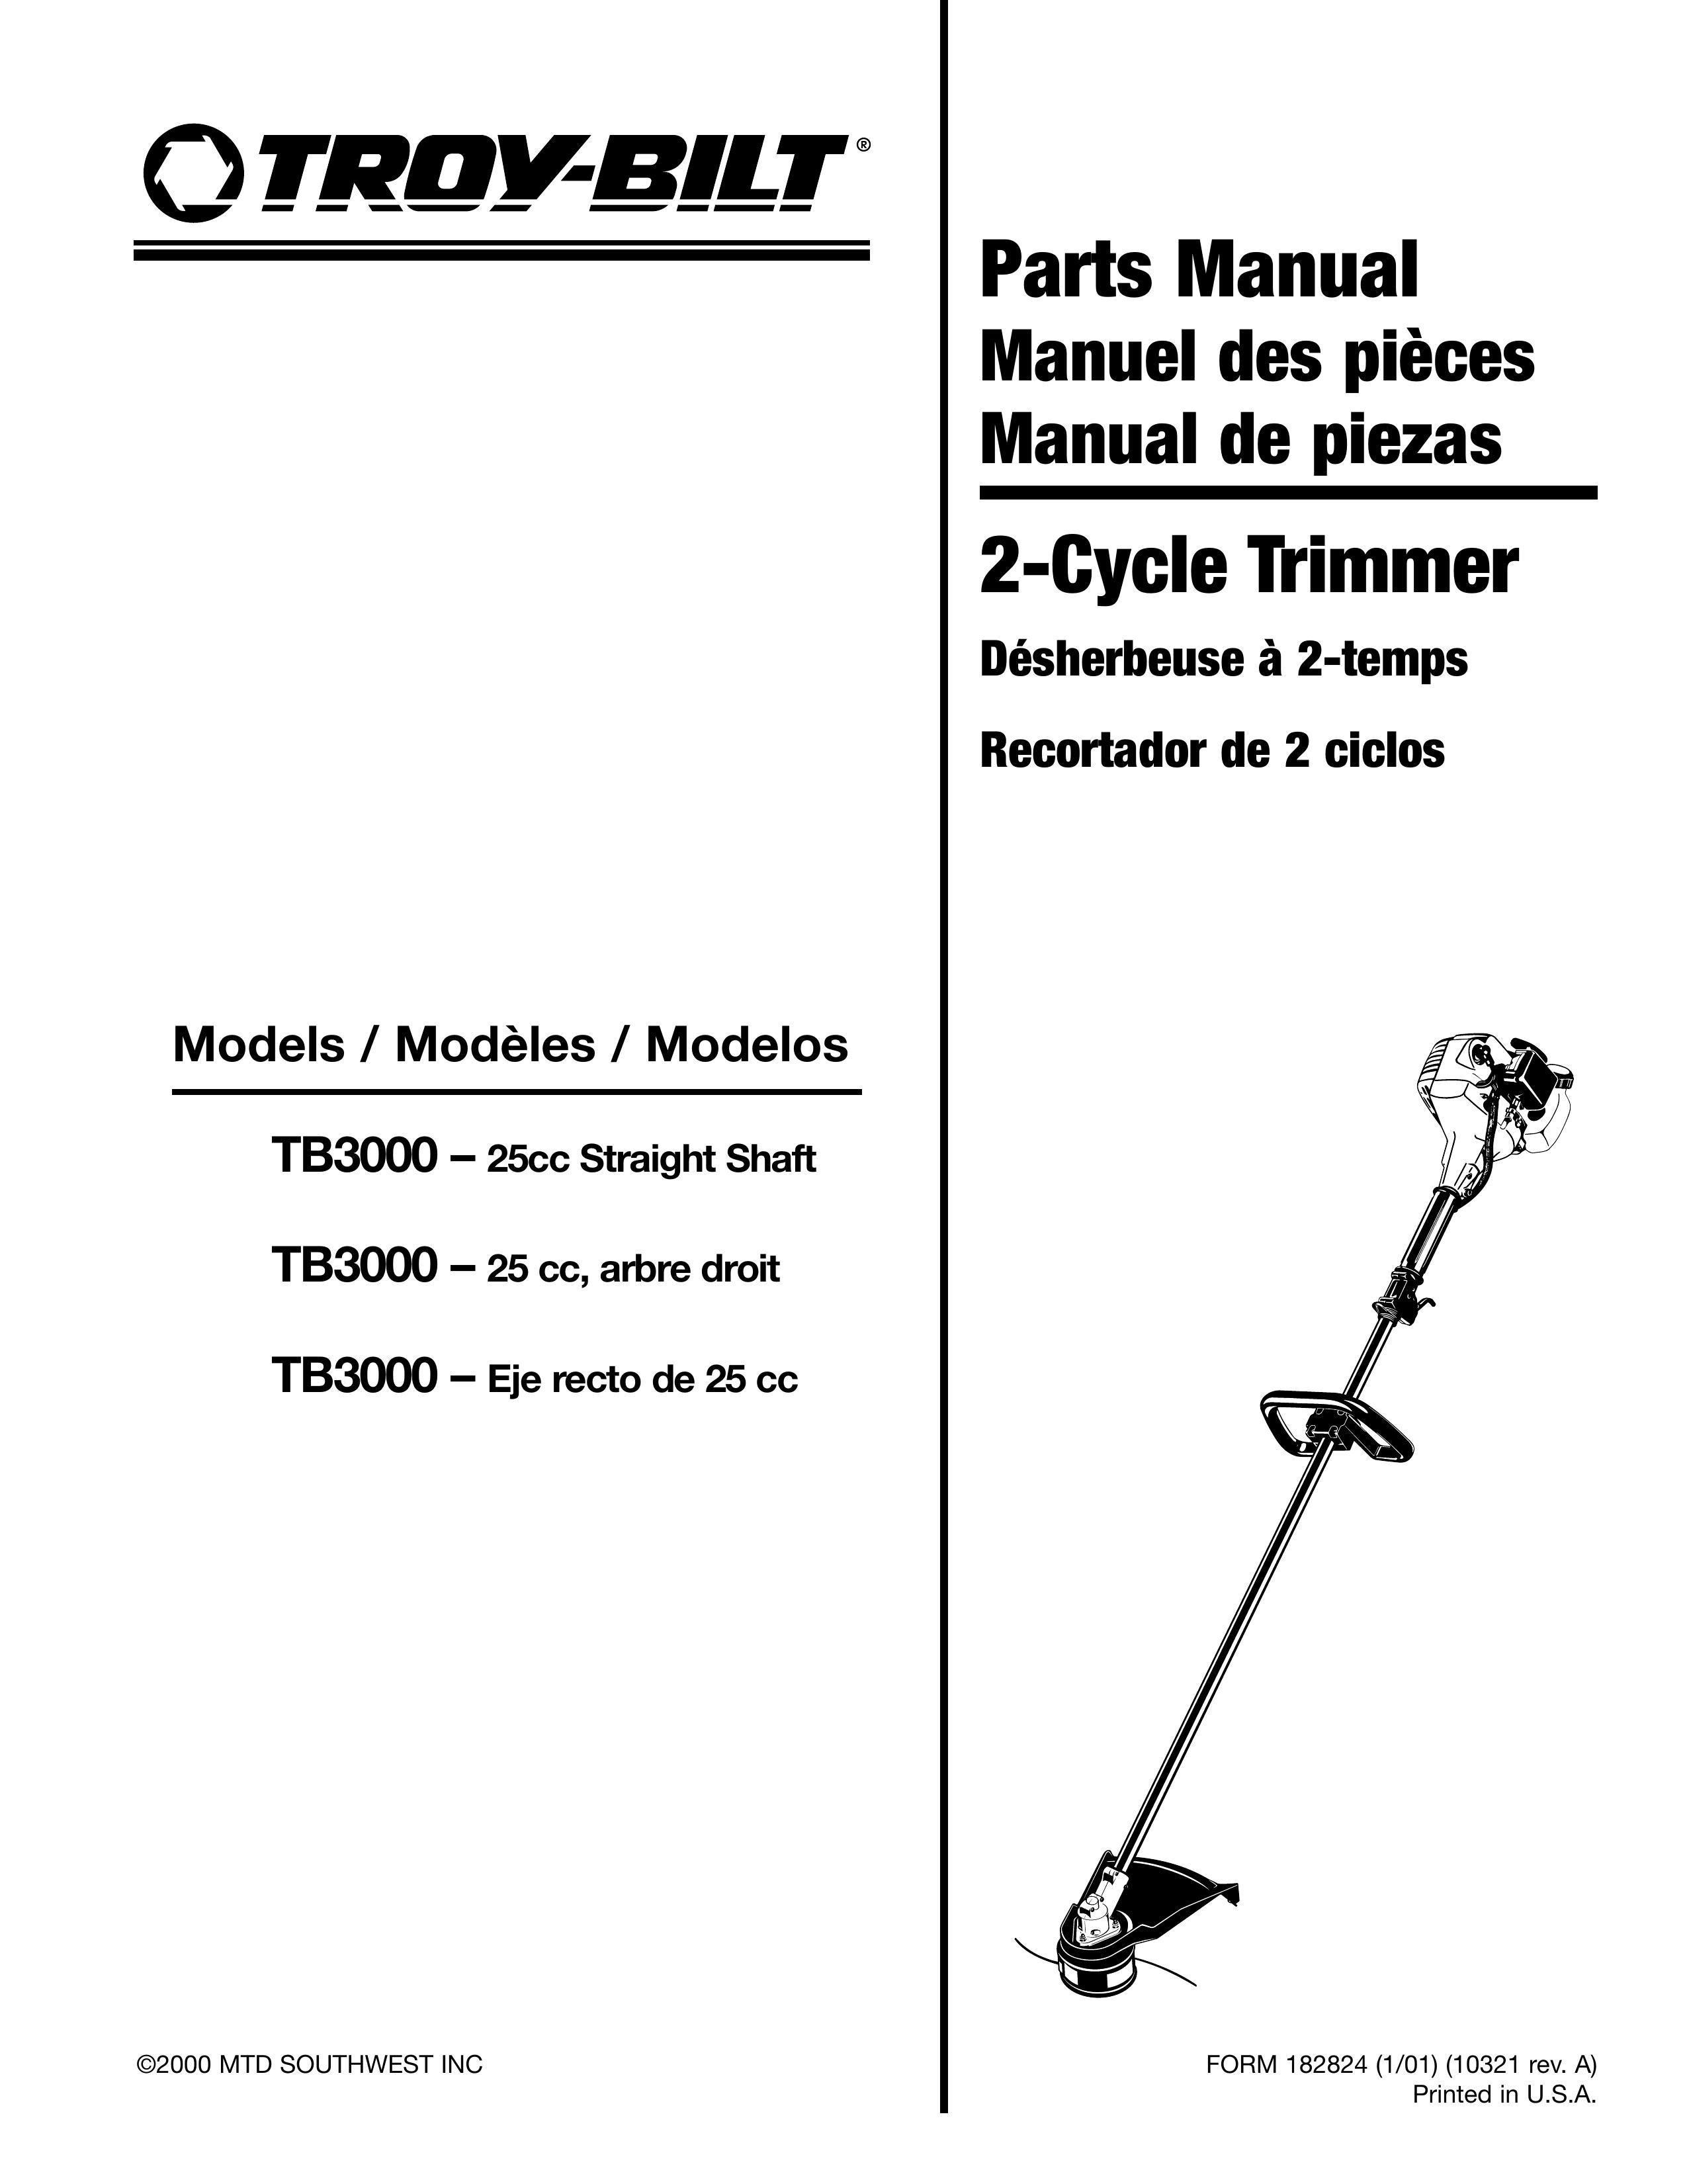 Troy-Bilt ARBRE DROIT Trimmer User Manual